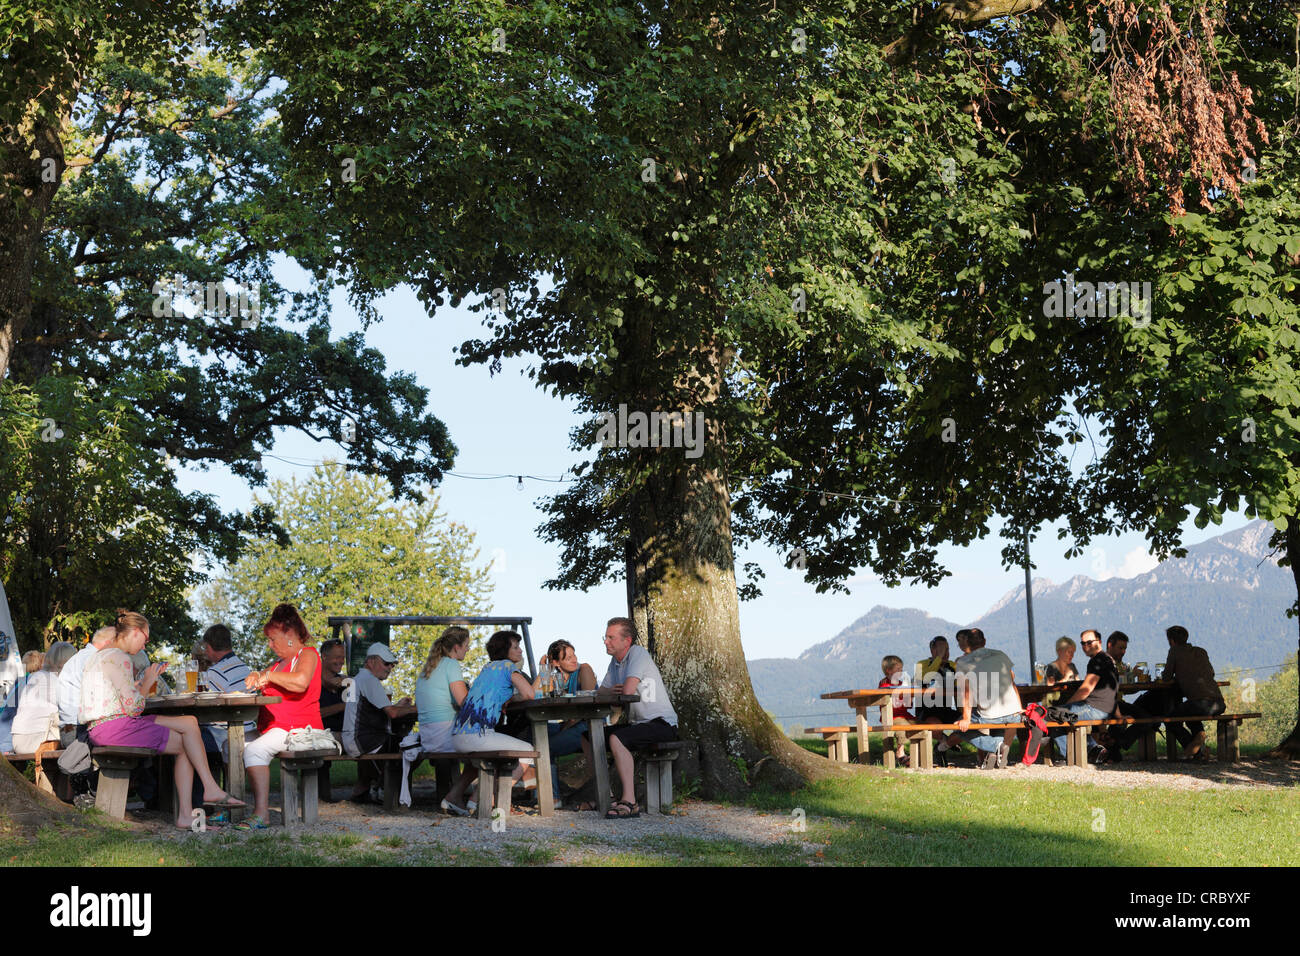 Beer garden of the Aehndl Inn, Murnau, Blaues Land region, Upper Bavaria, Bavaria, Germany, Europe, PublicGround Stock Photo